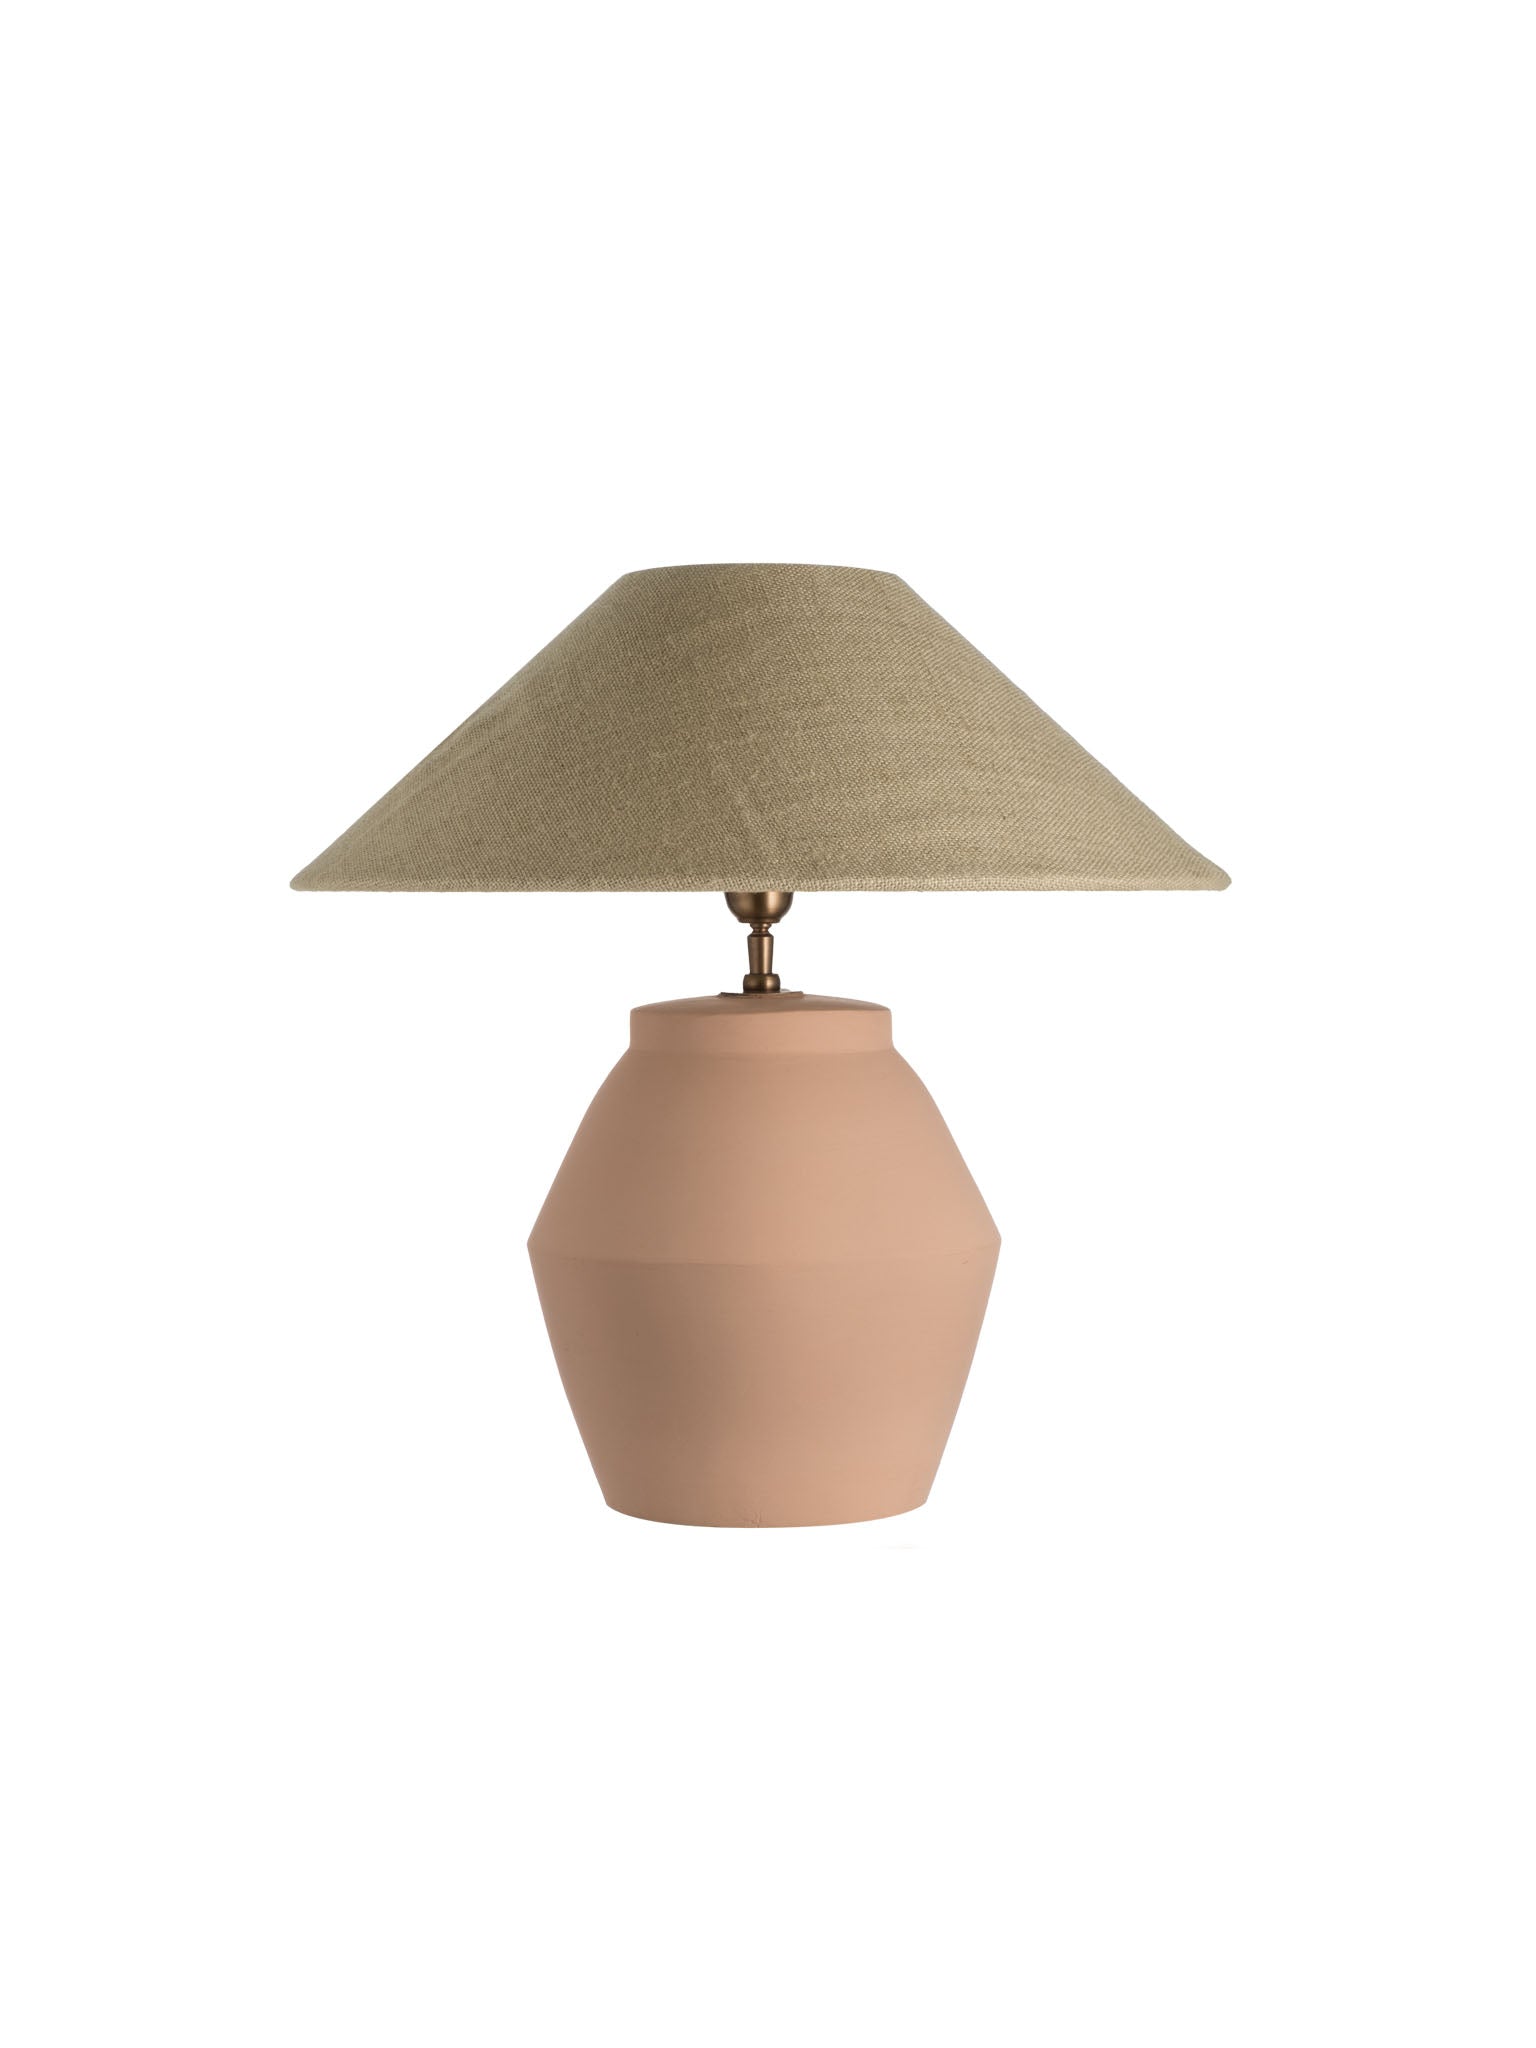 Milano terracotta table lamp